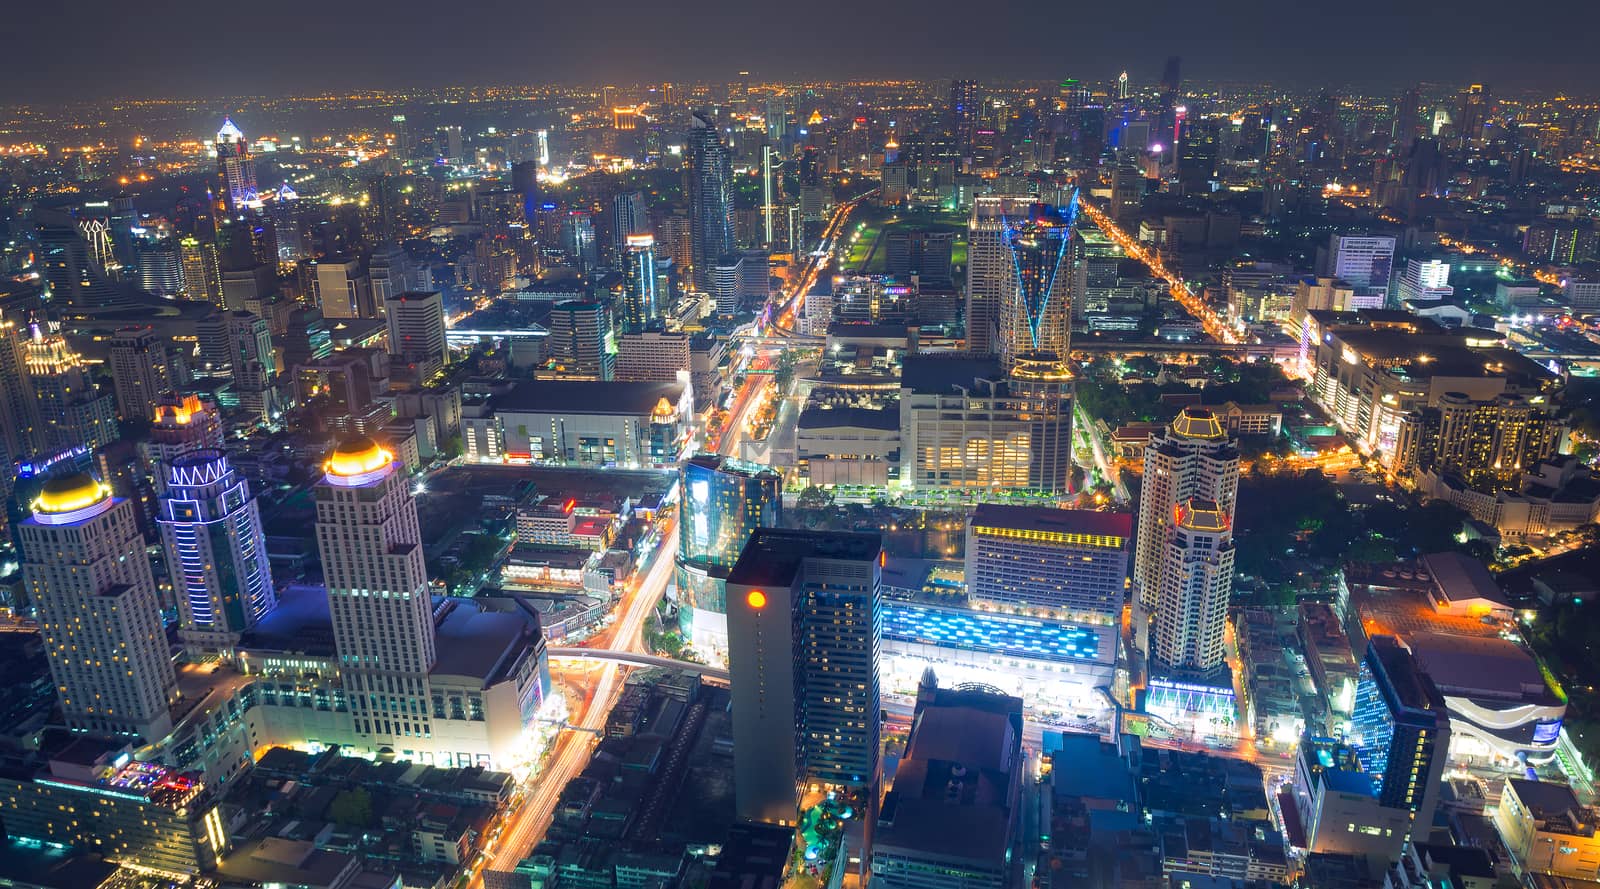 Bangkok at night or Twilight, Aerial Scenic Panoramic view